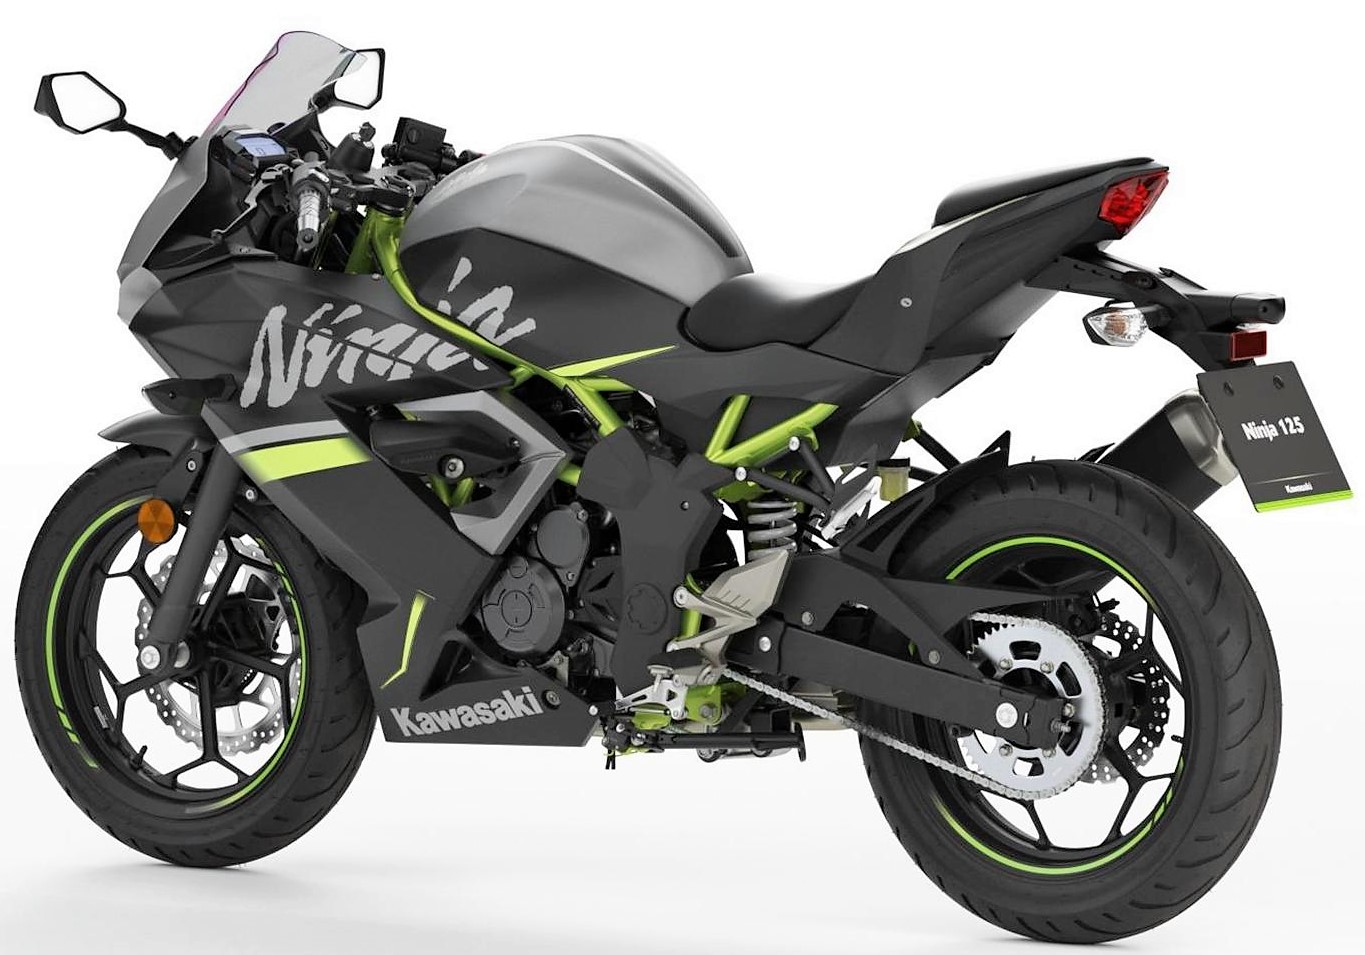 Kawasaki Ninja 125 Sportbike - Legends Start Here (5 Quick Facts) - landscape